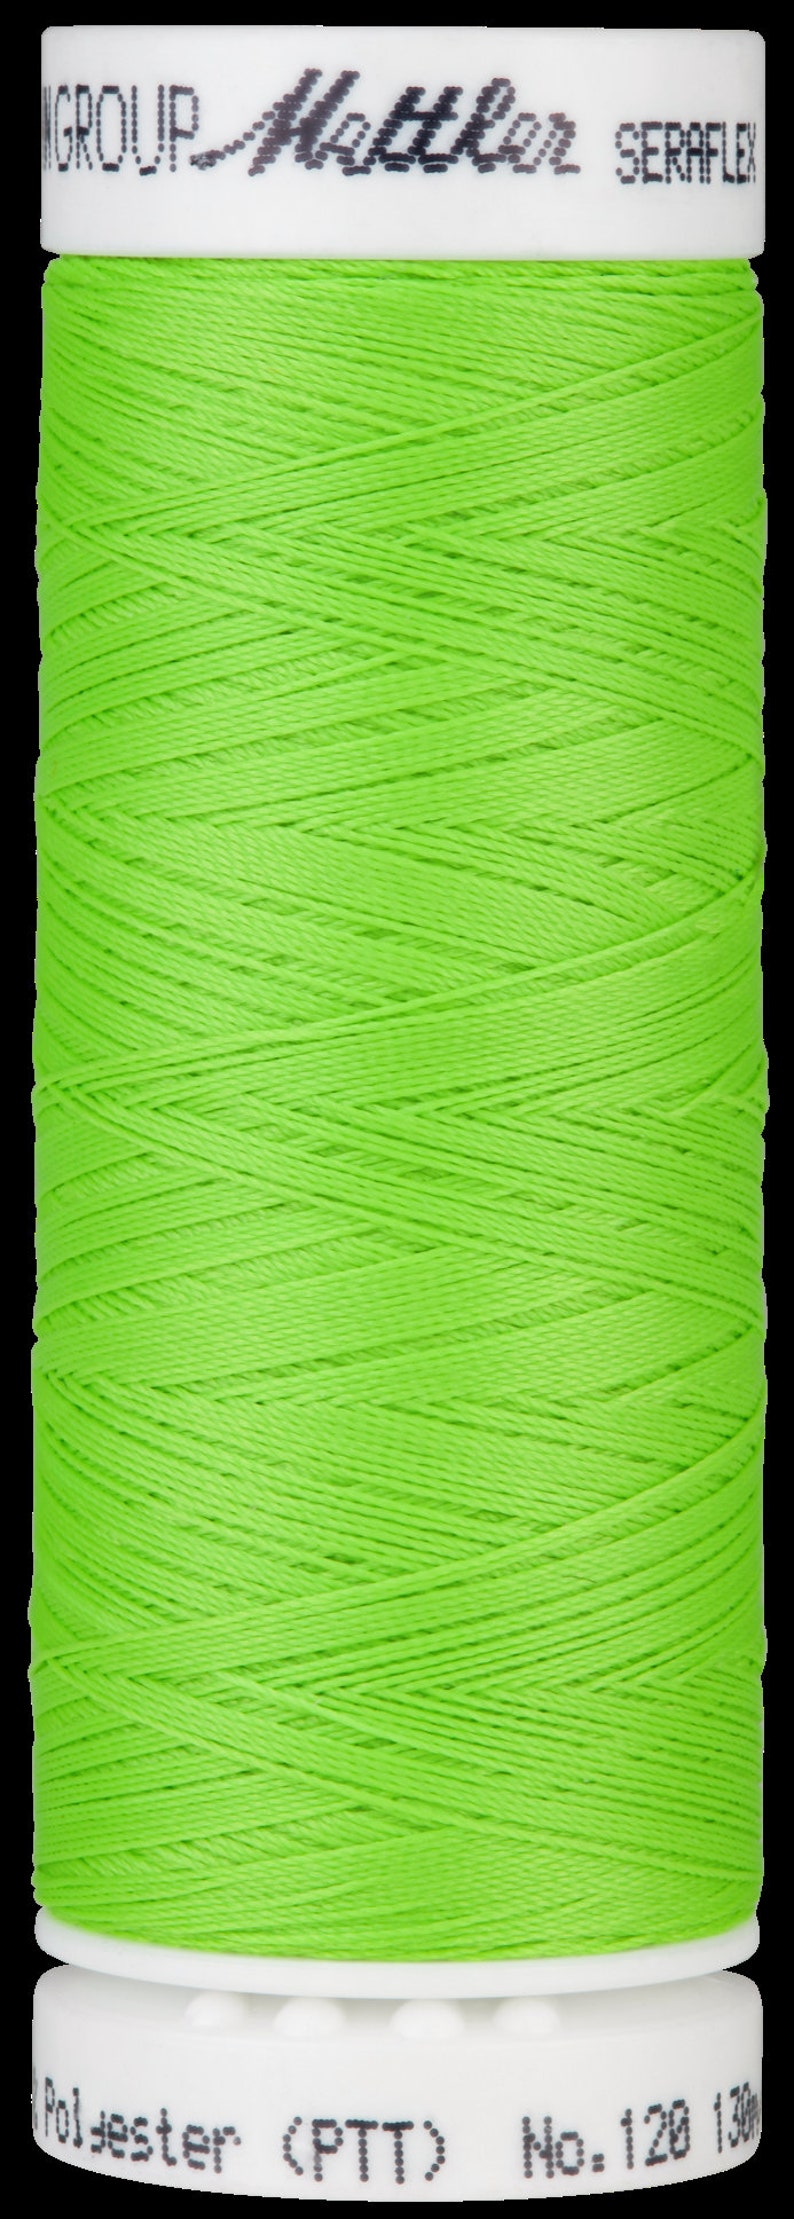 NEUE Farben Seraflex 120 flexibler Faden Nähfaden blau türkis grün braun Mettler green viper